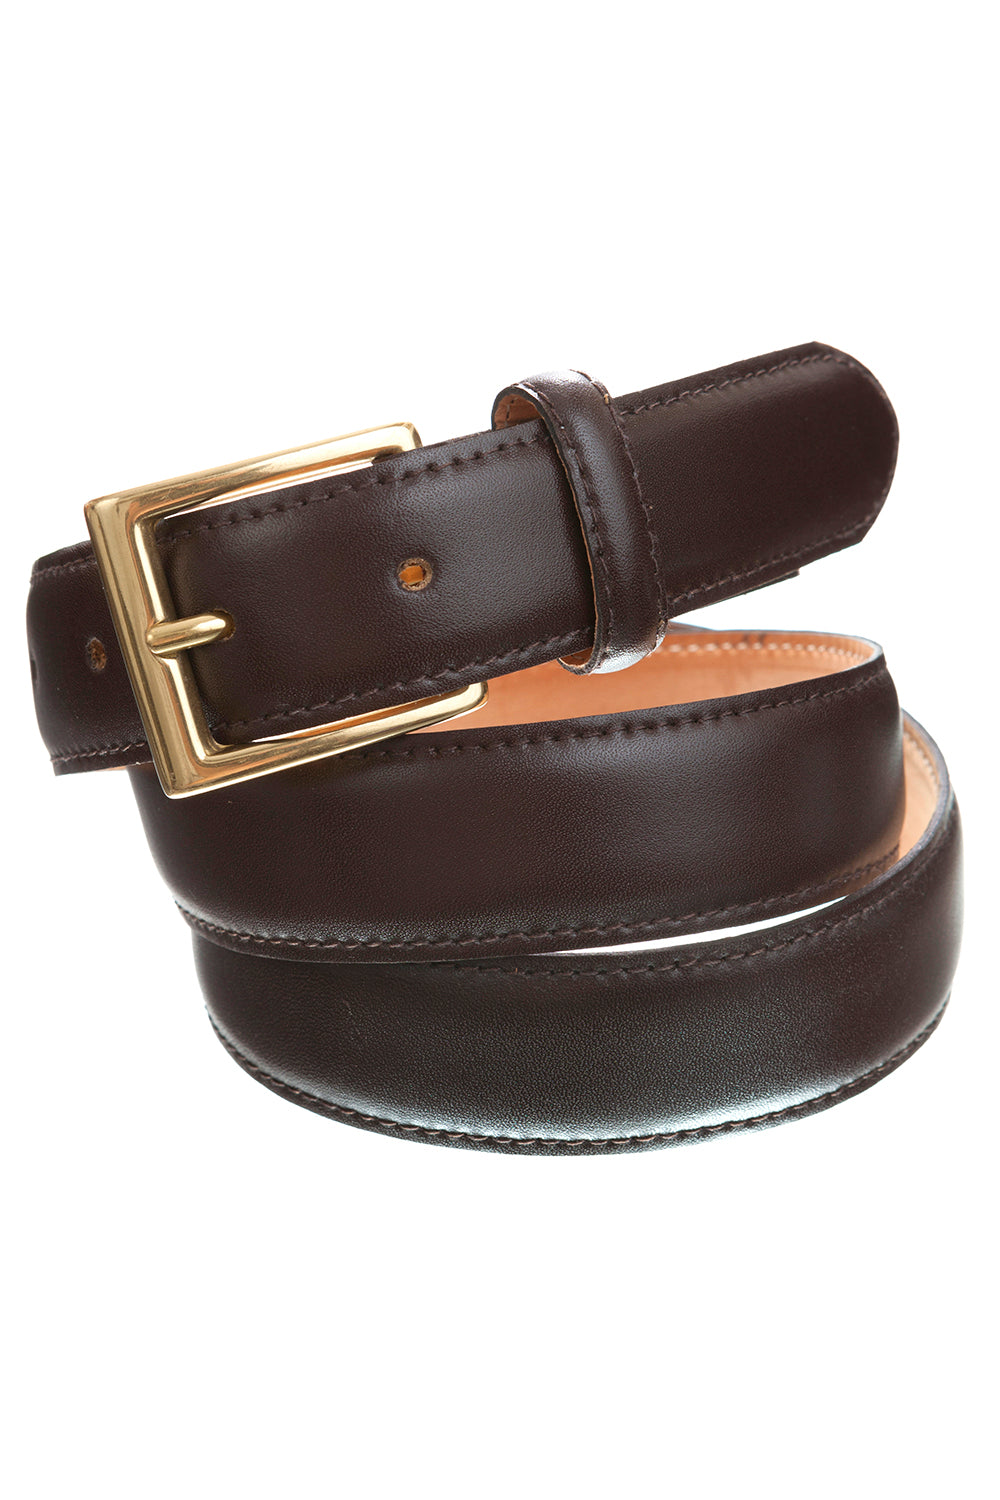 Regent - Suit Belt - Leather - Brown - Gold Buckle - Regent Tailoring